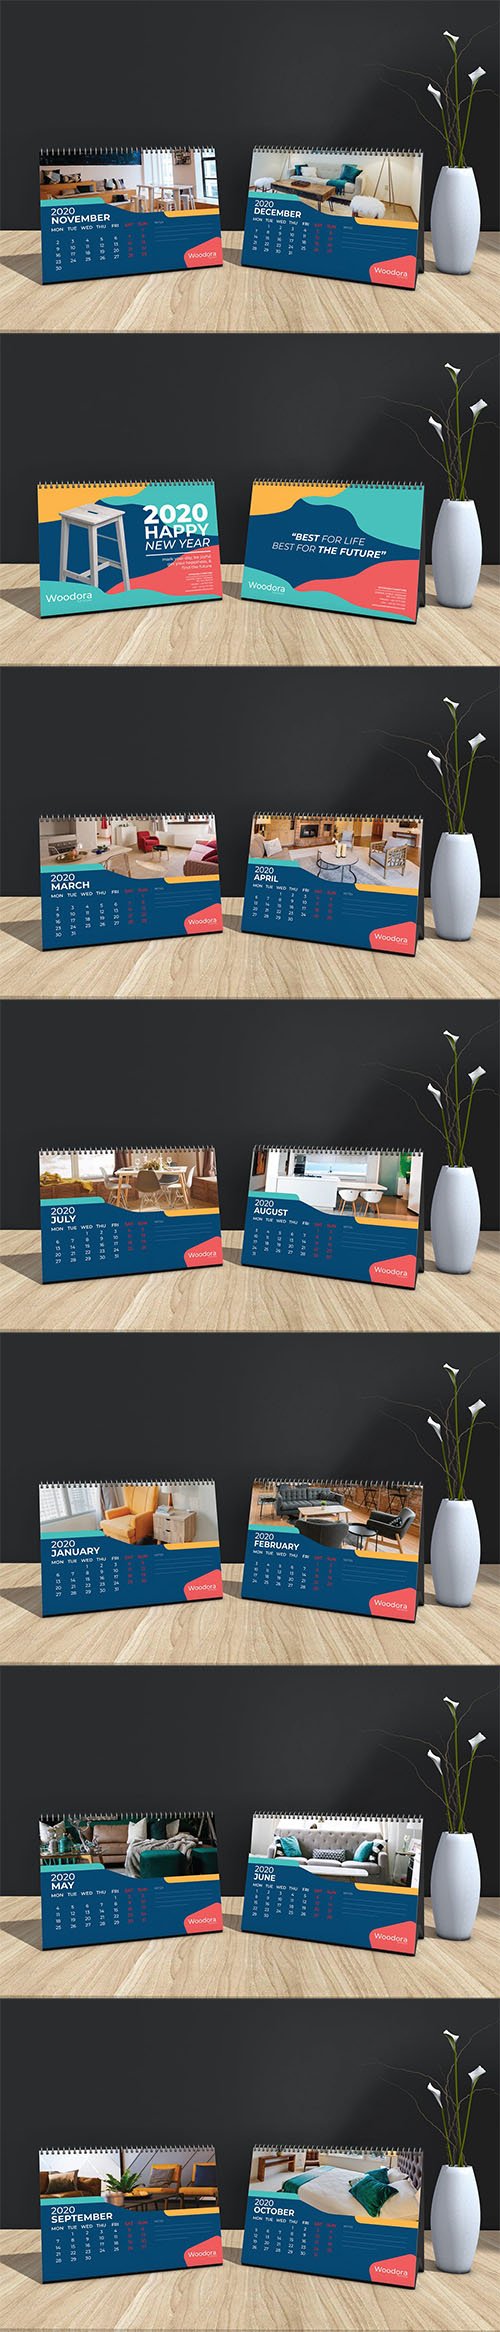 Woodora Furniture Table Calendar 2020